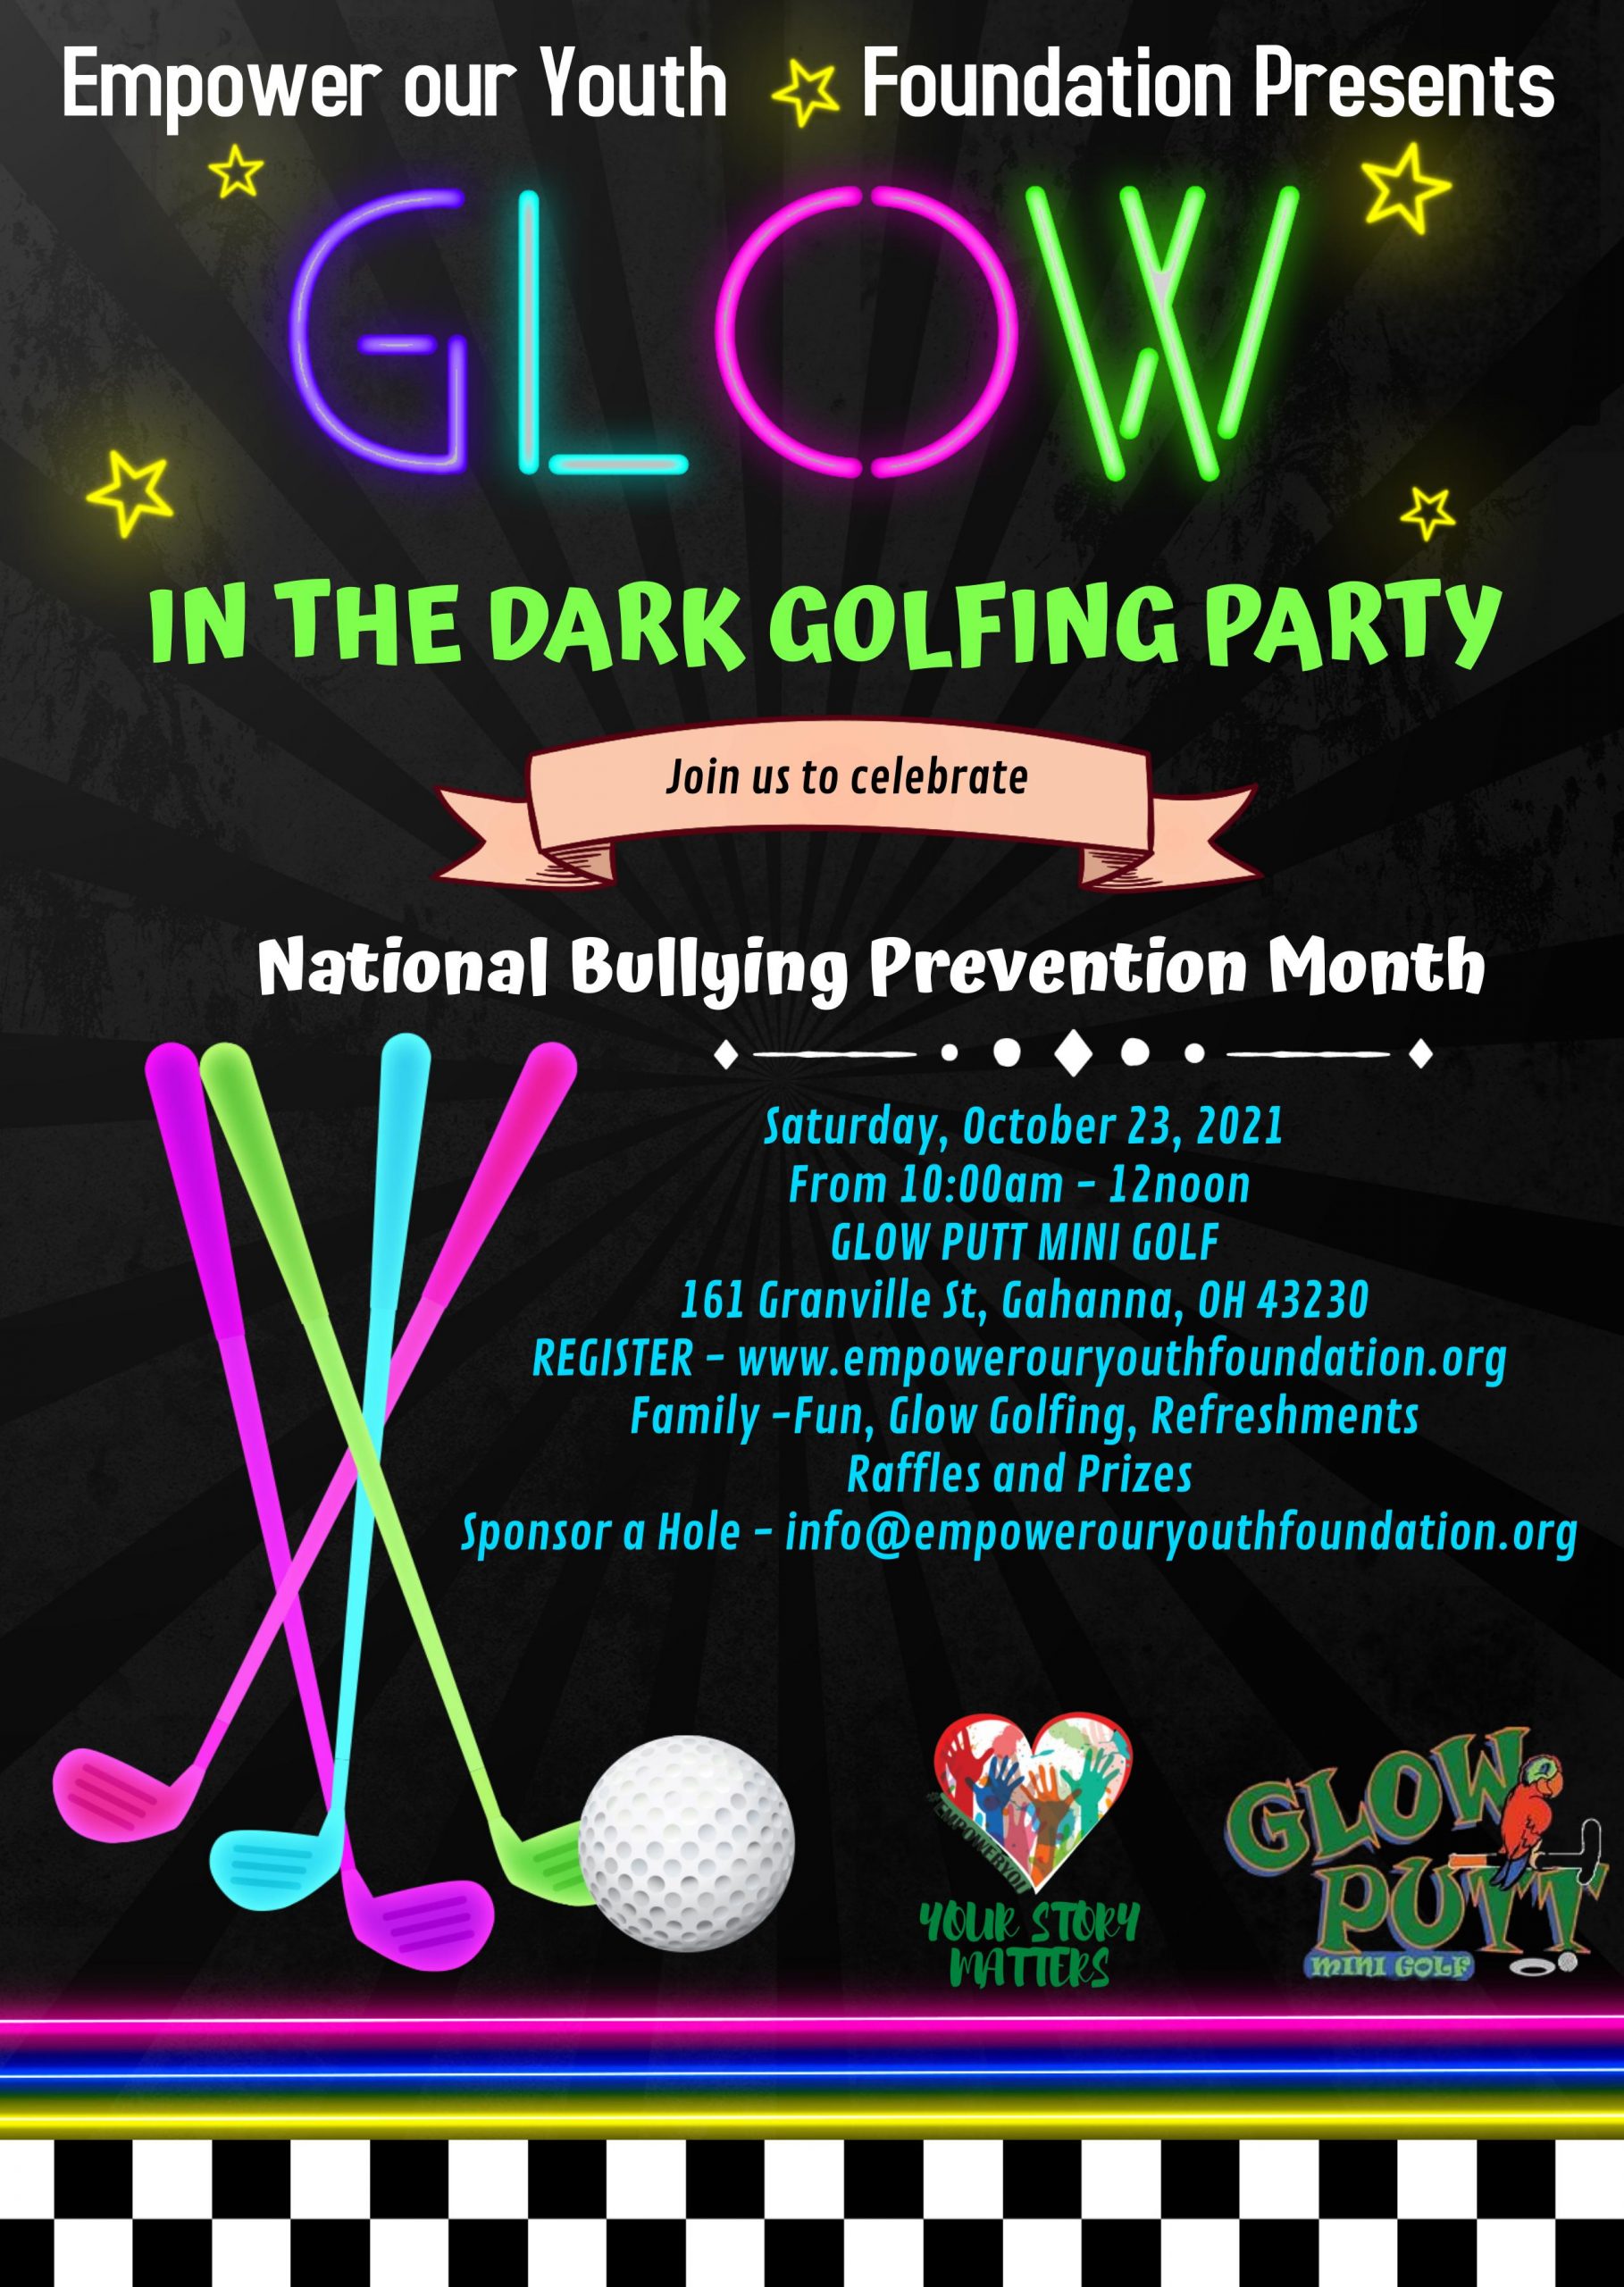 Glow in the Dark Golfing Party